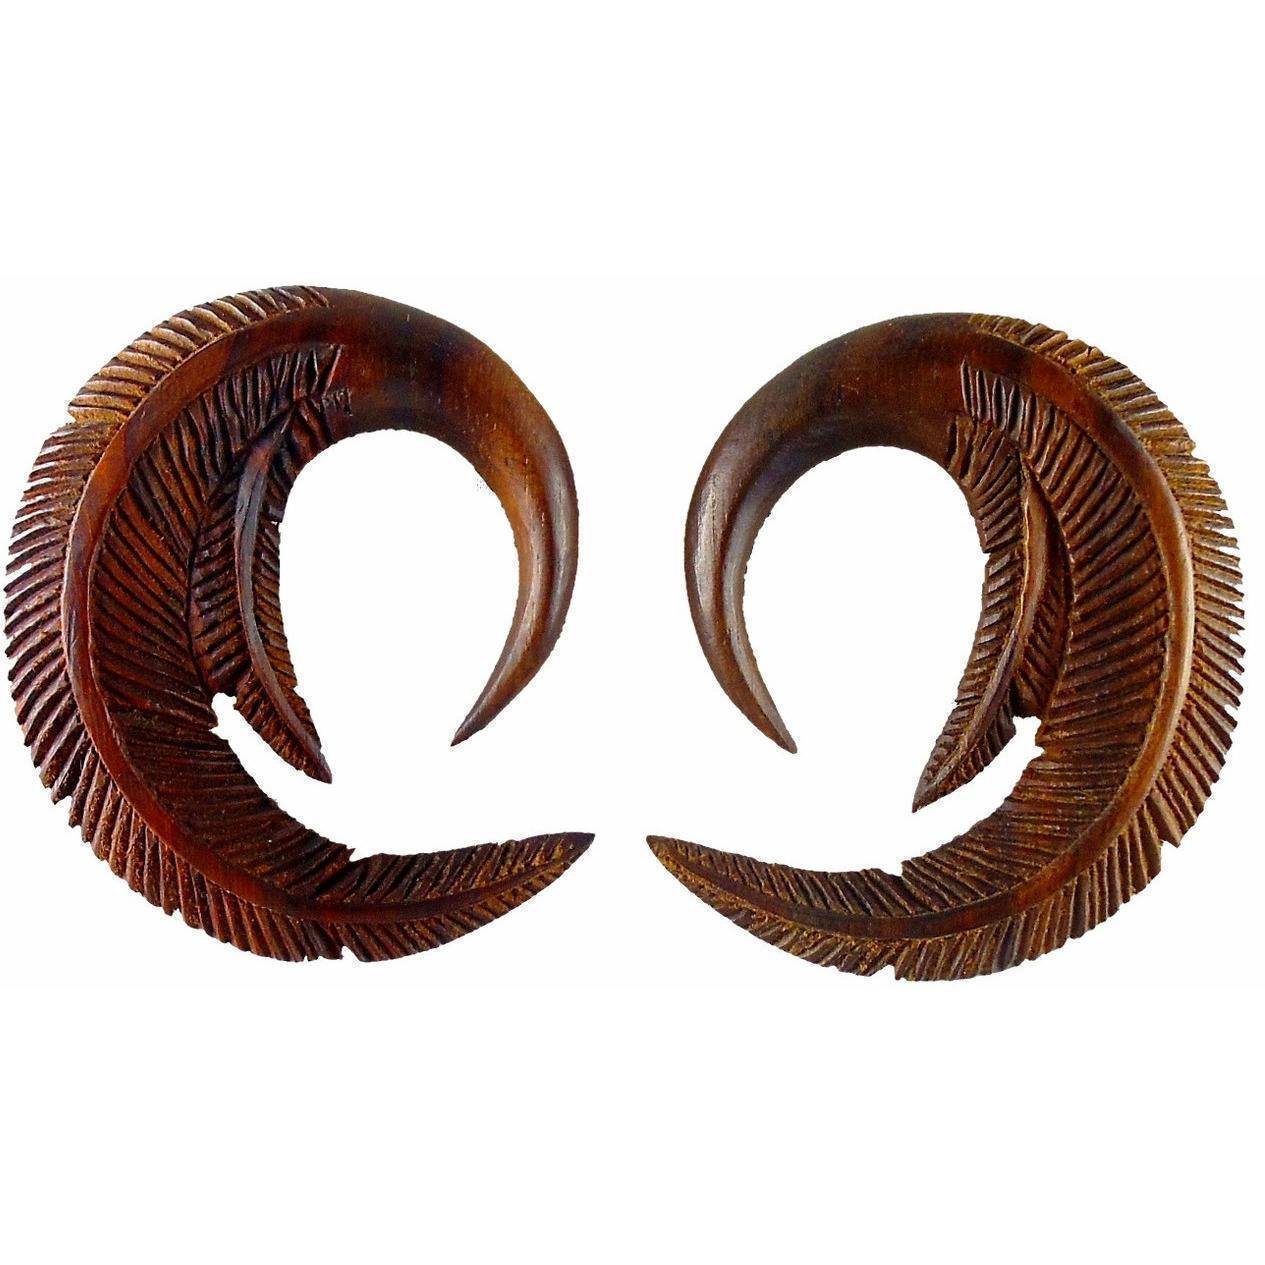 00 Gauge Earrings :|: Feather. Rosewood 00g, Organic Body Jewelry. | Wood Body Jewelry